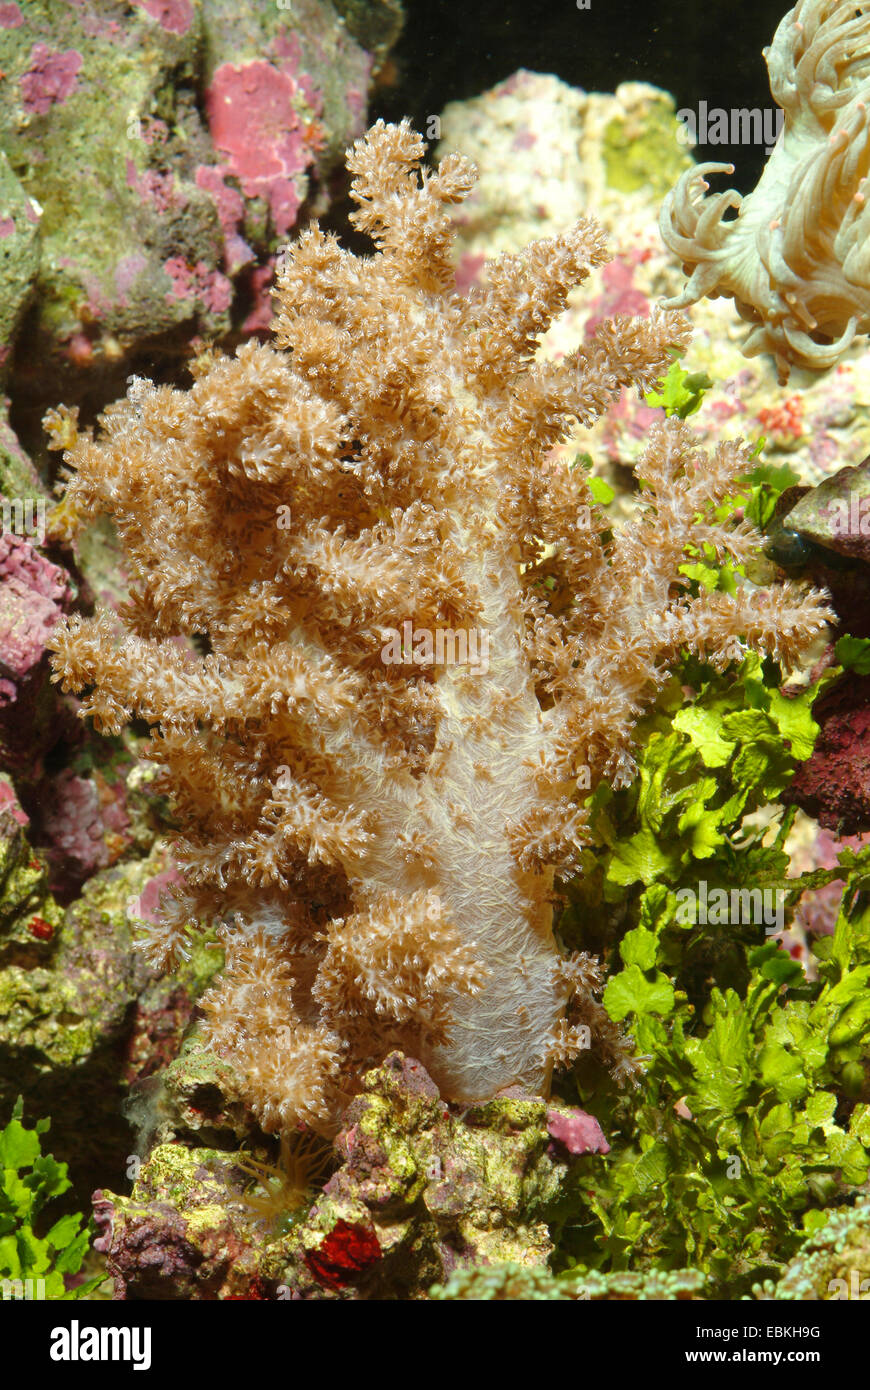 Kenya Tree Coral (Capnella imbricata), close-up view Stock Photo